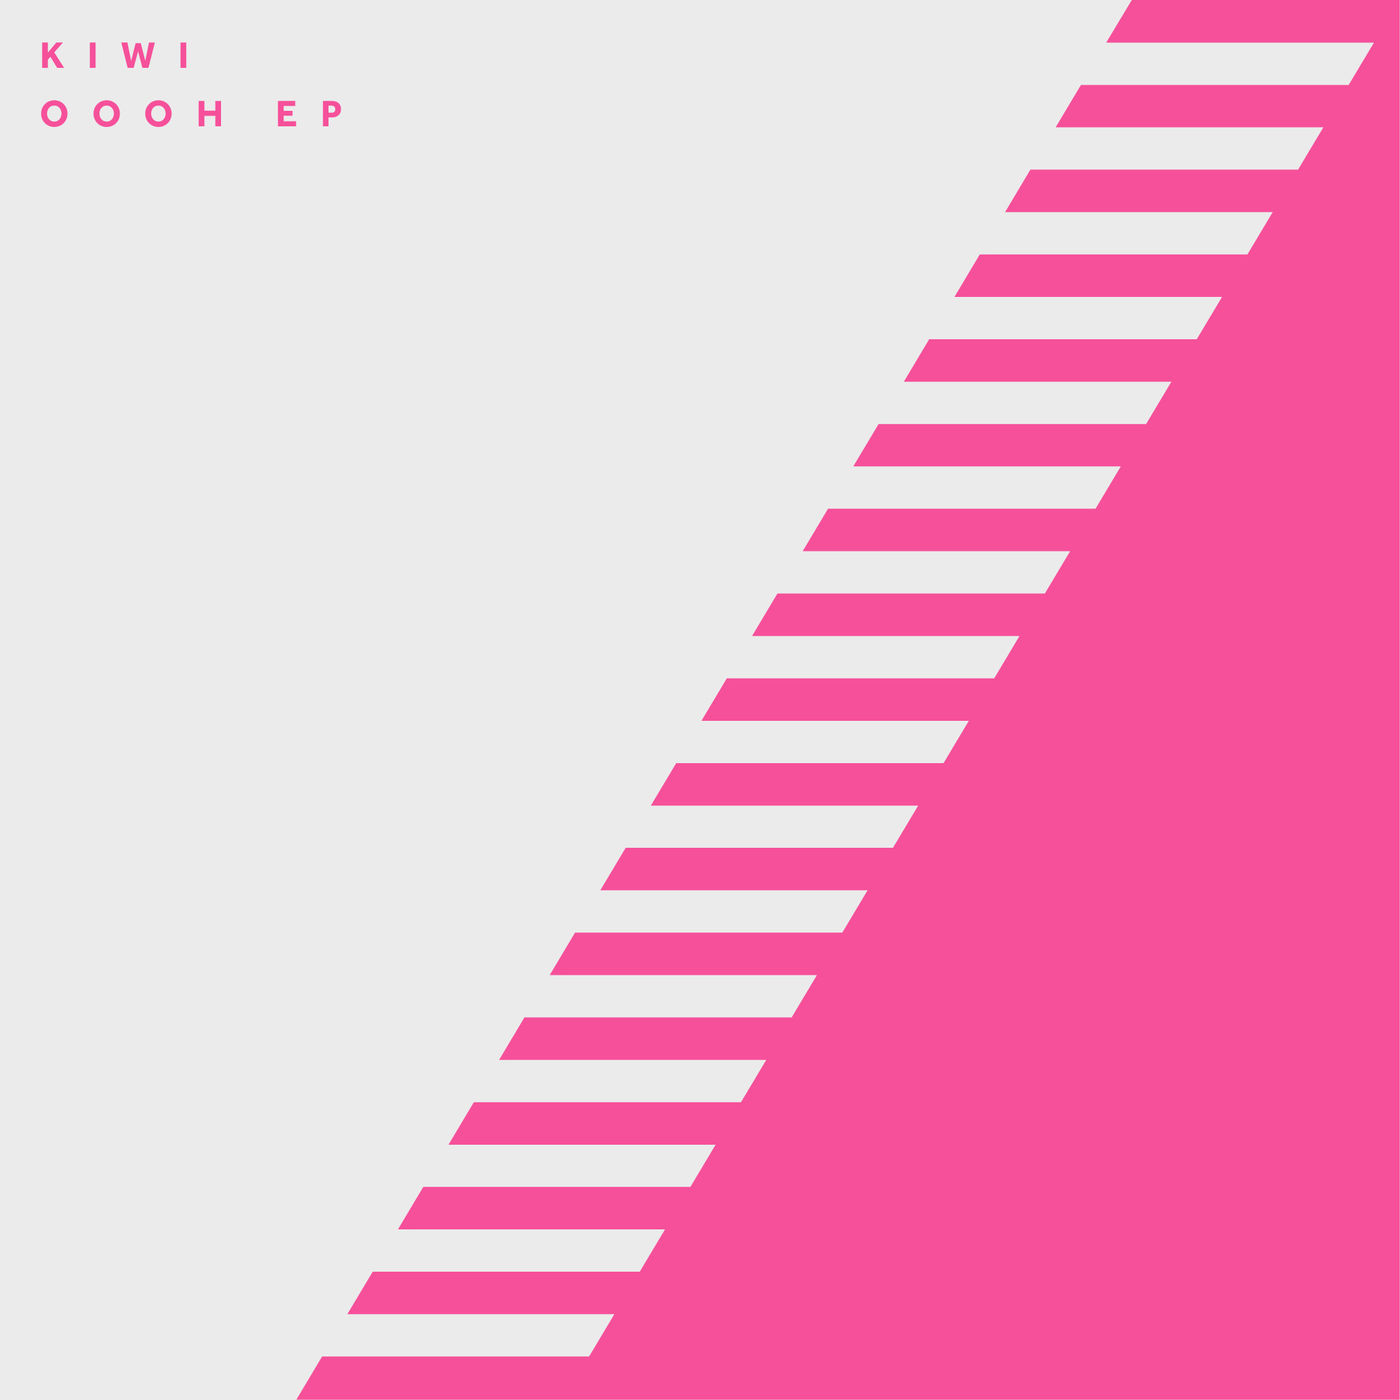 Kiwi - Oooh EP / 17 Steps